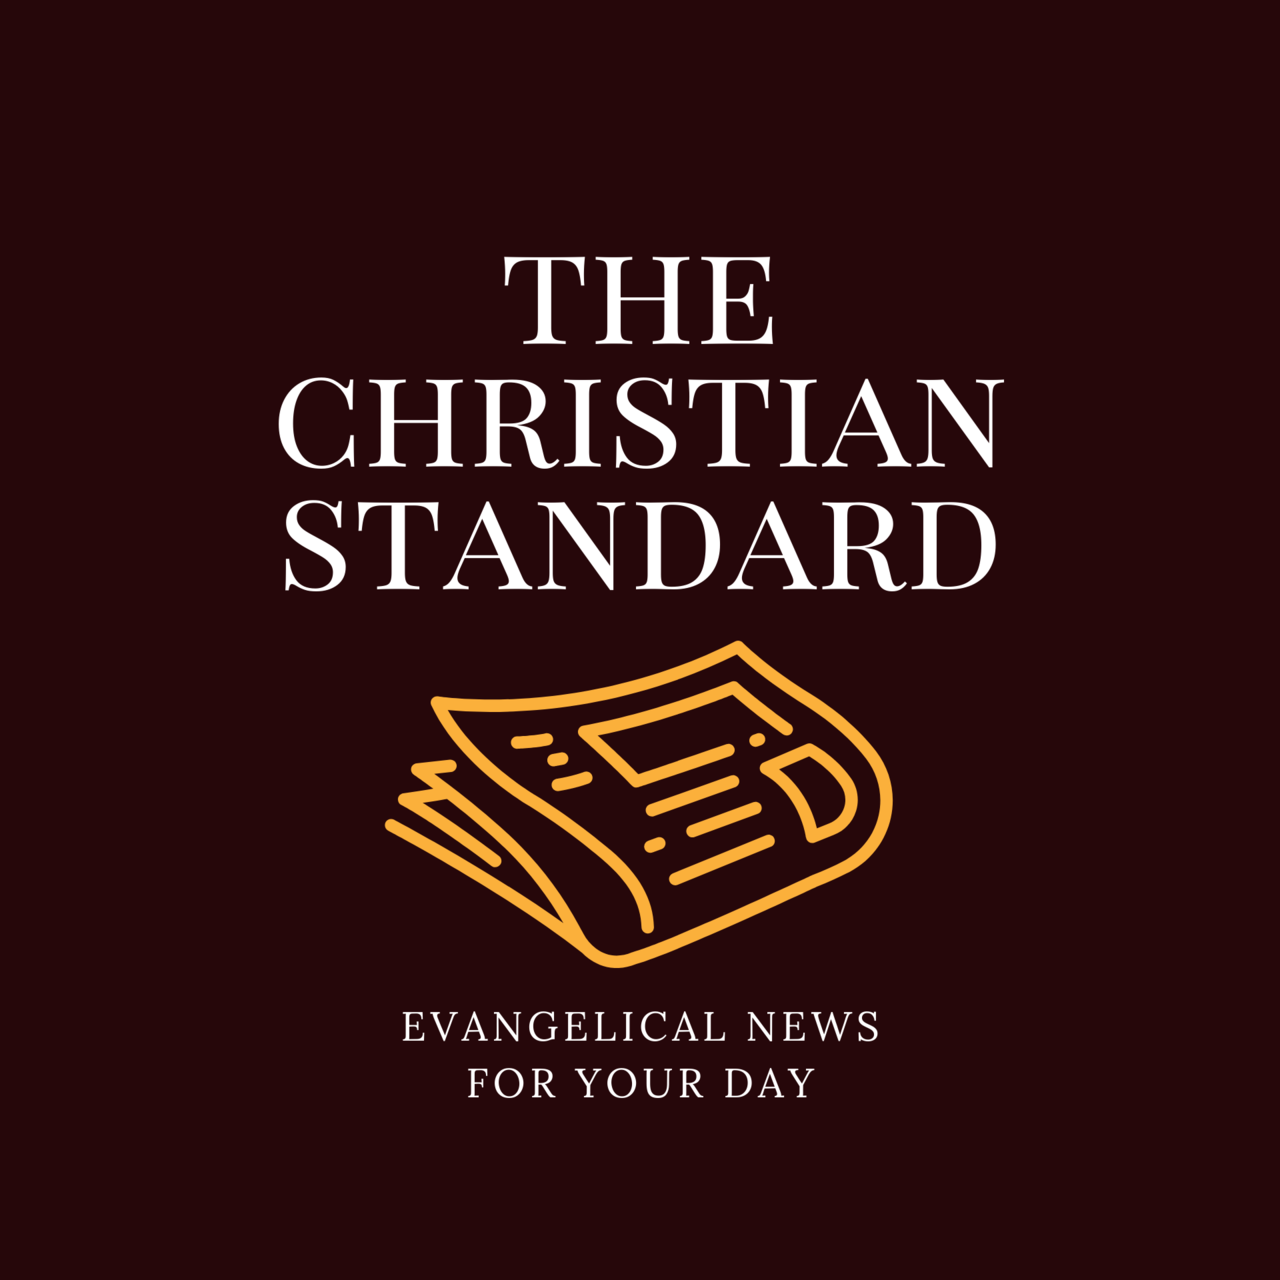 The Christian Standard